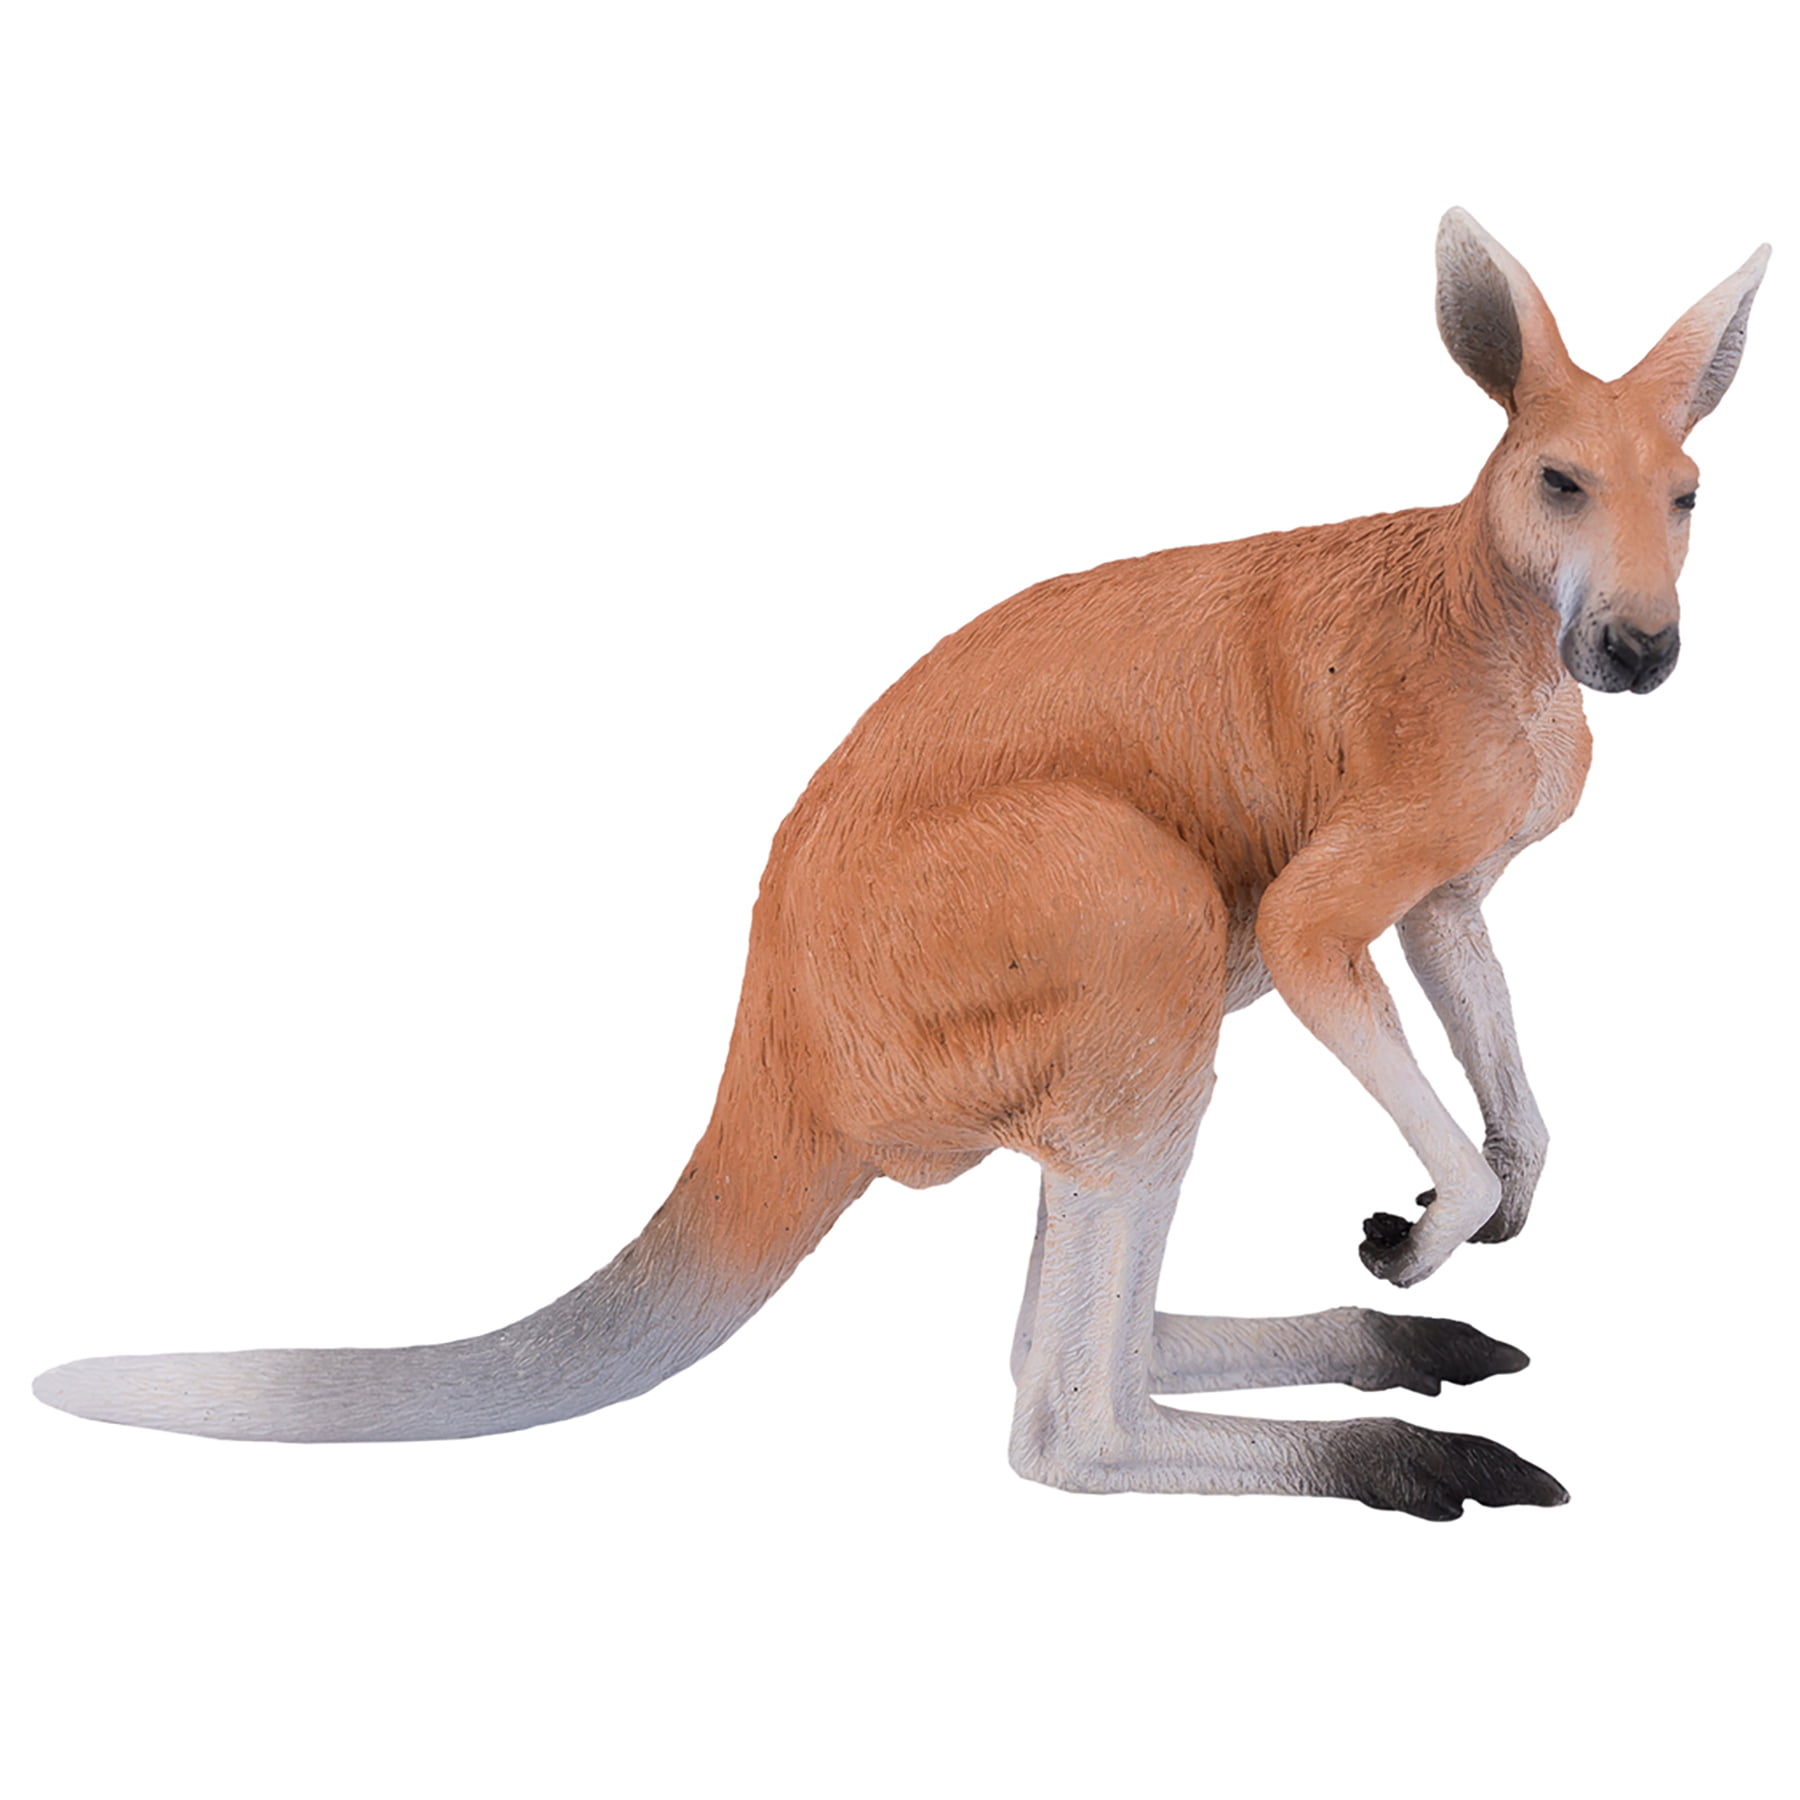 Little Kangaroo Wild Animal Figurine Model Kids Toy Home Decoration Crafts 